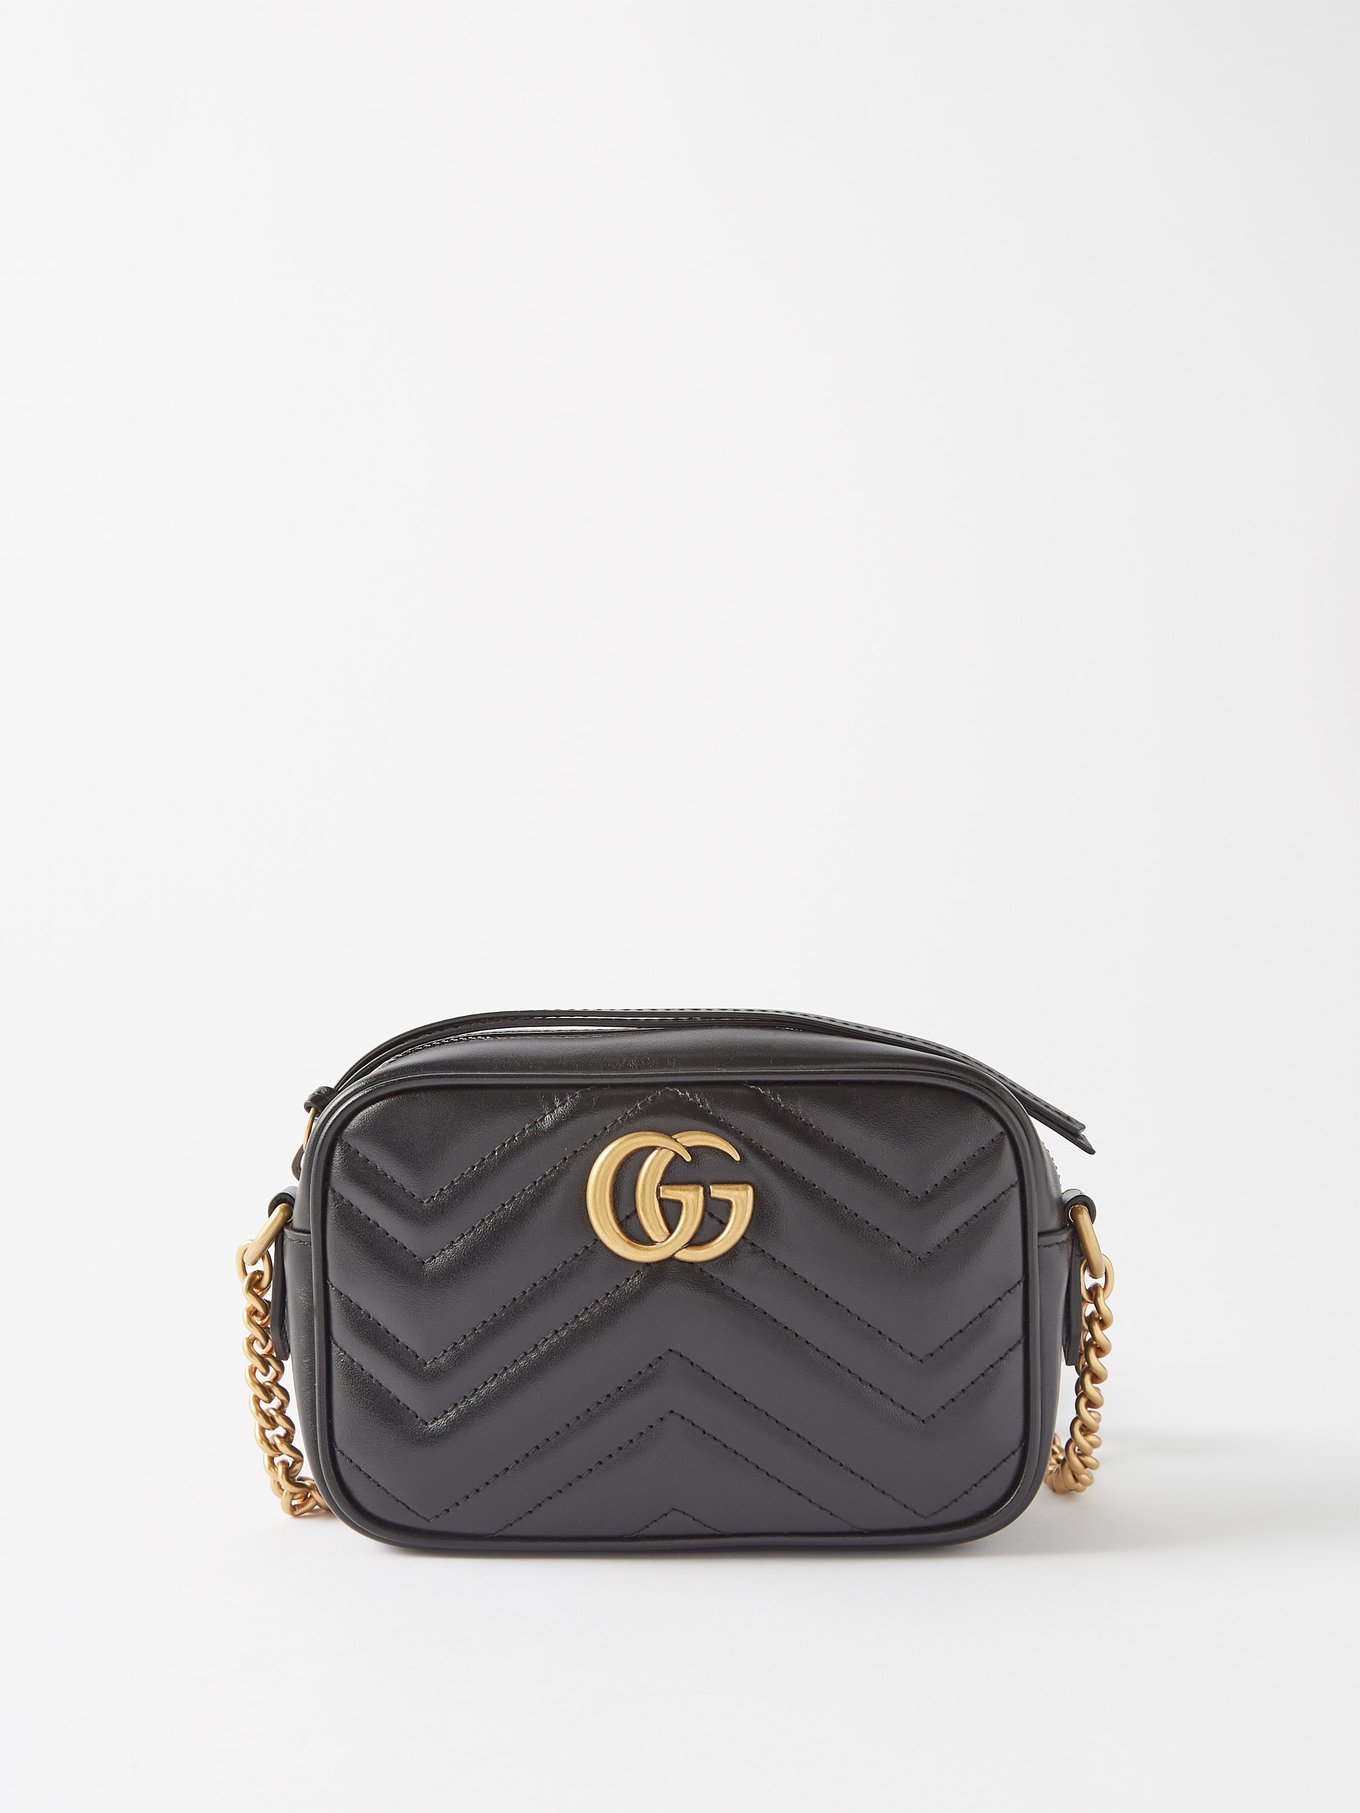 Gucci Black GG Marmont Key Case  Gucci black, Gucci bag, Leather